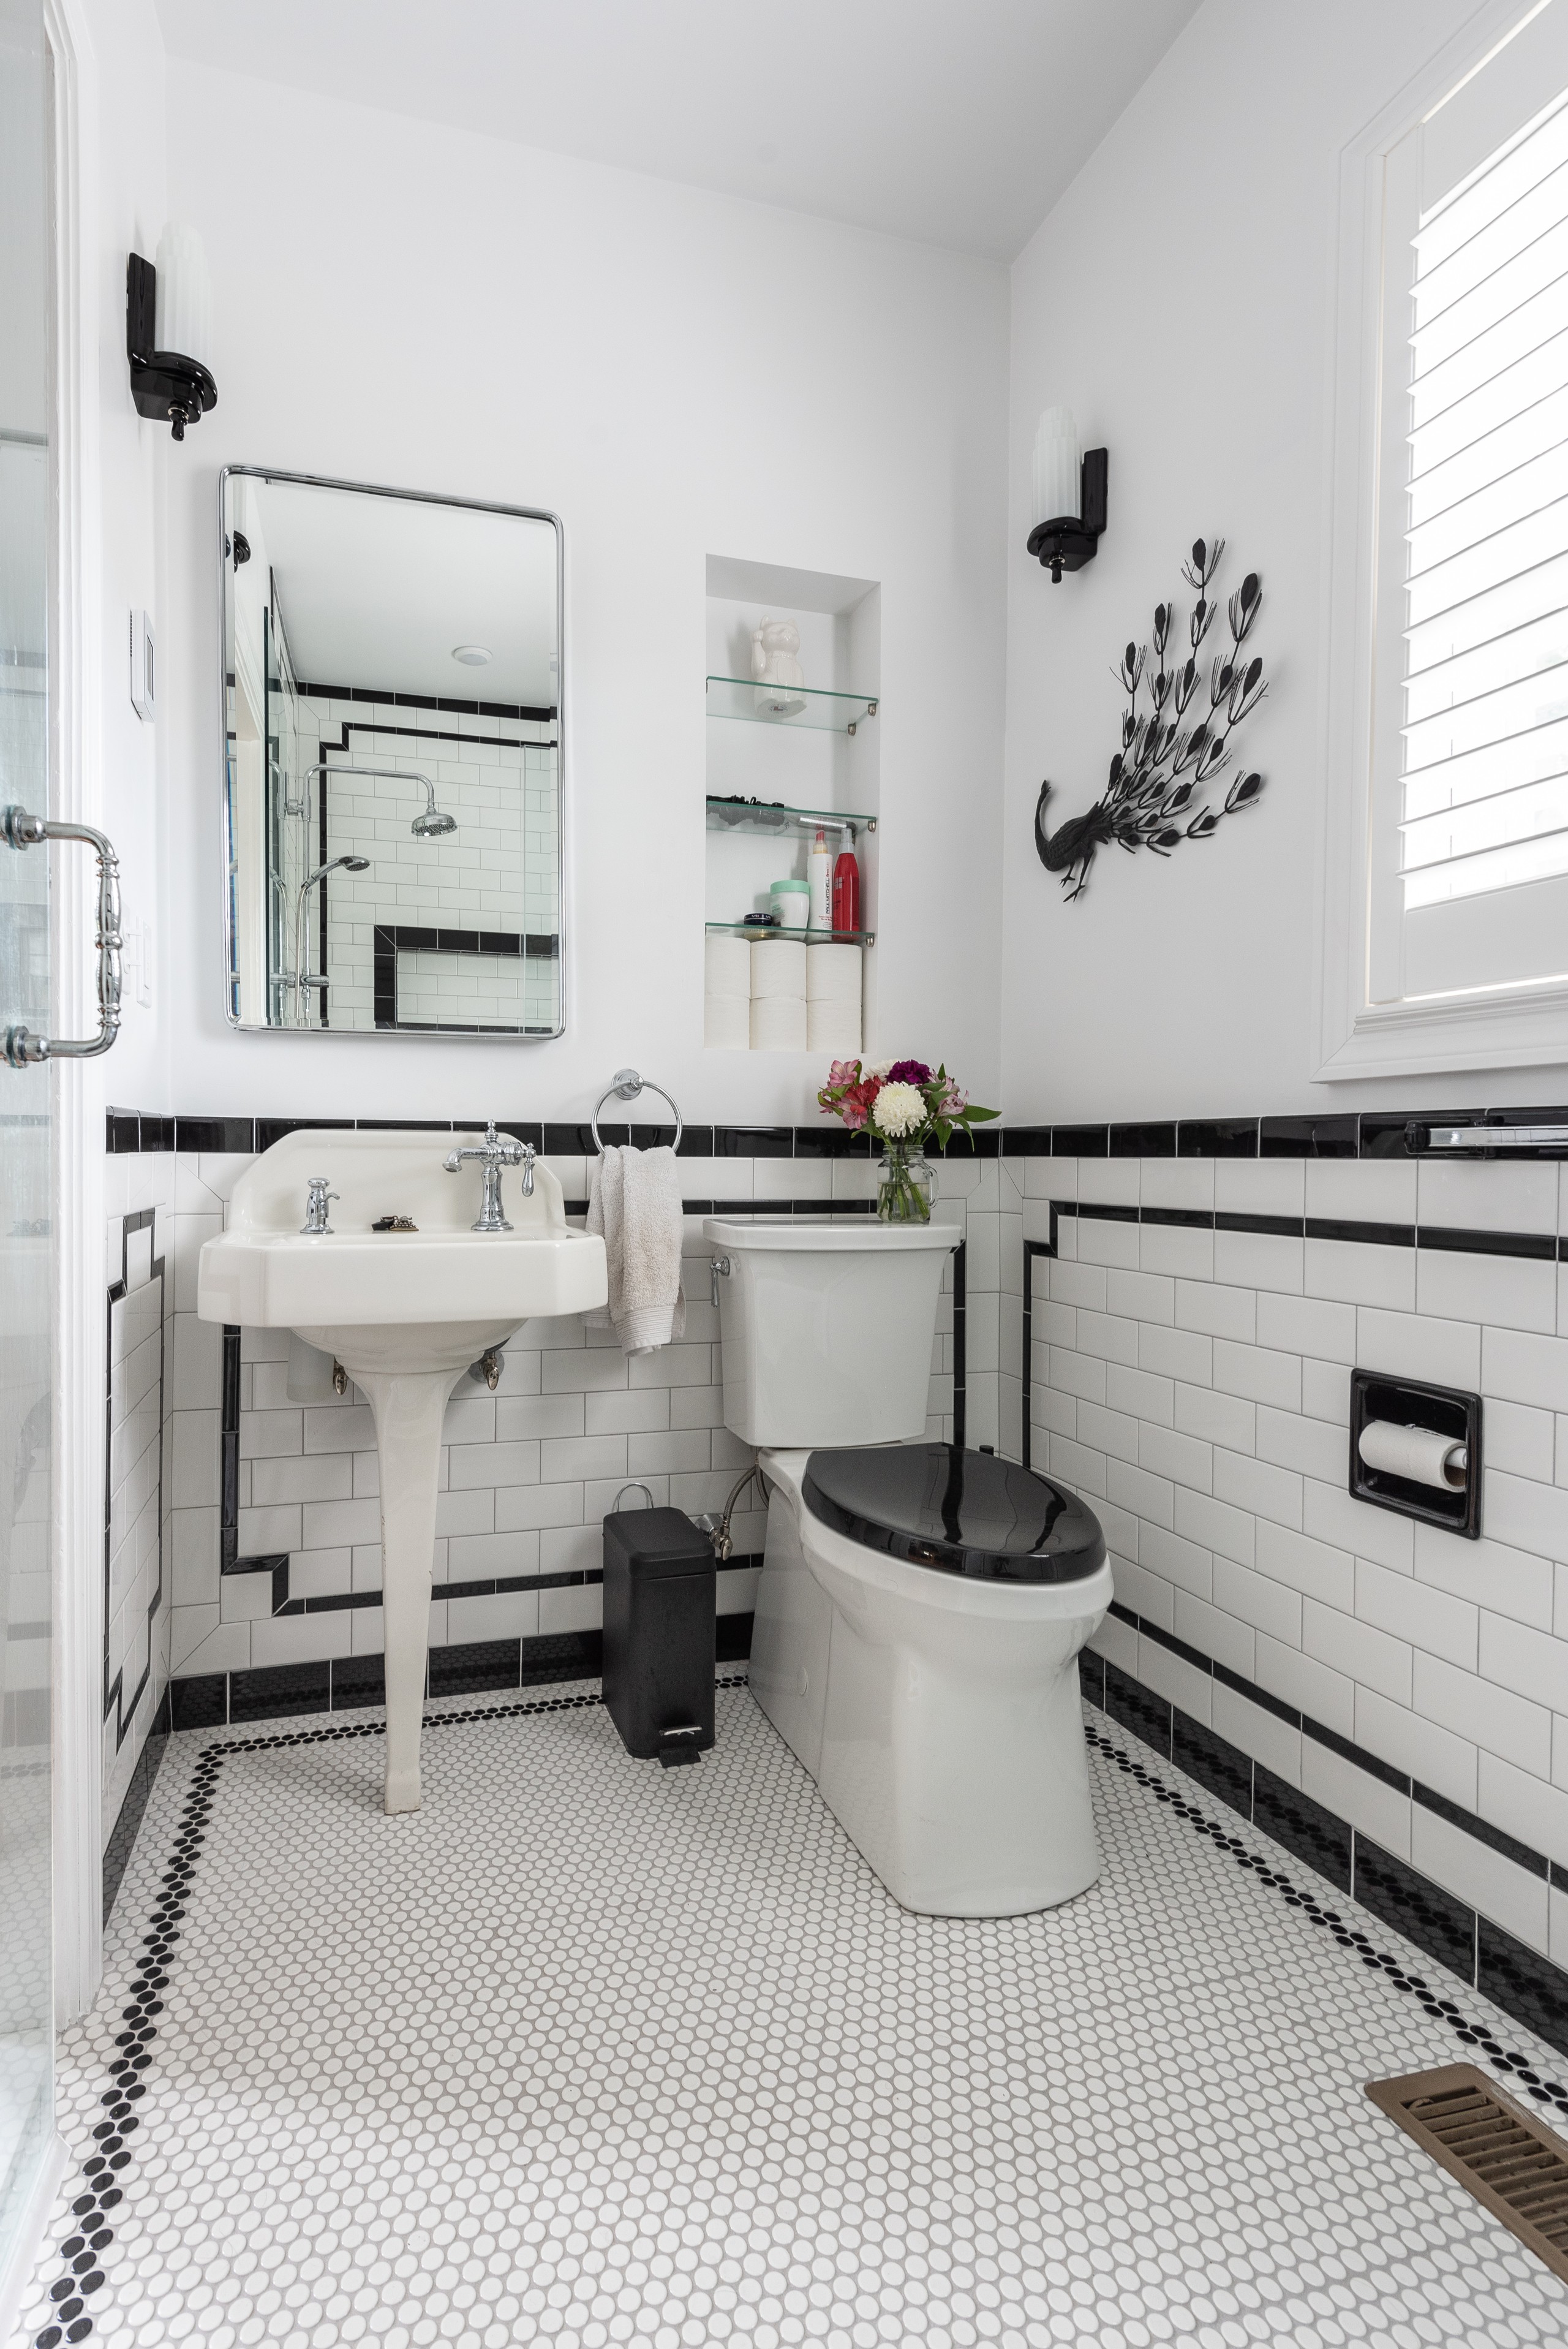 White Tile Bathroom Ideas, Black And White Tile Floor Small Bathroom